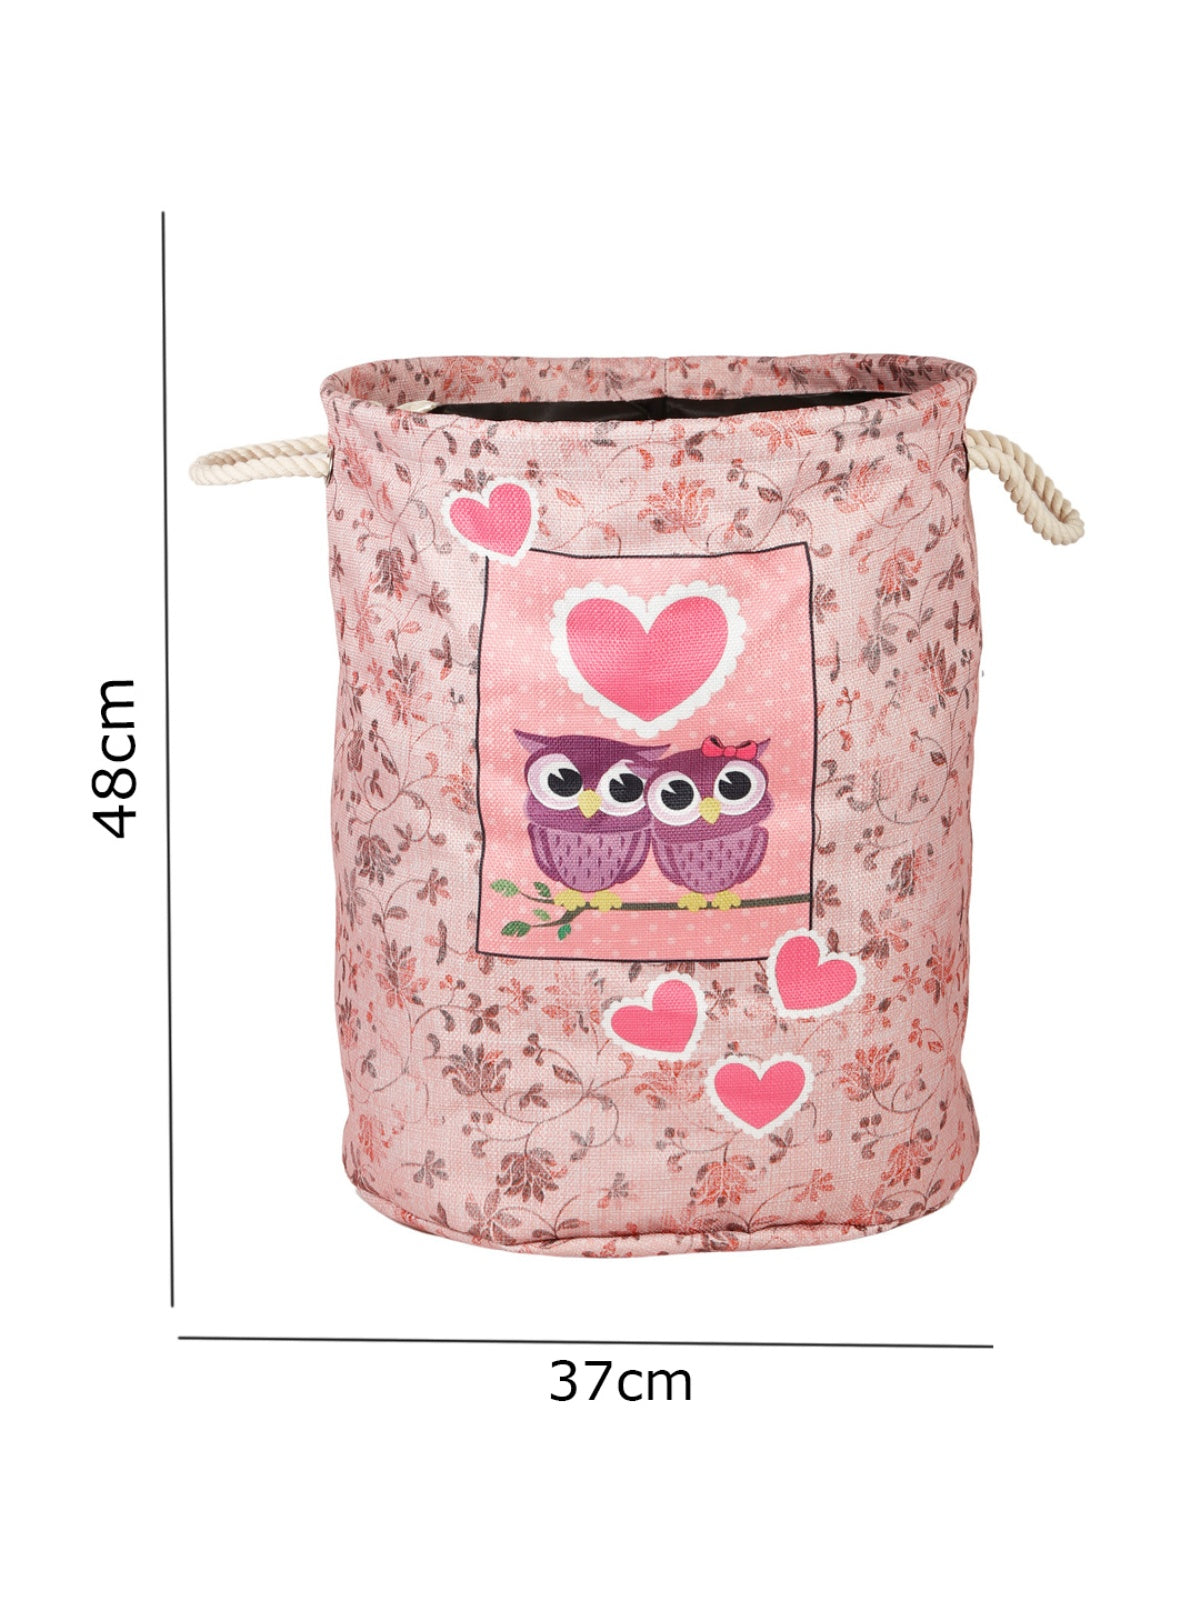 Polyester Slub Floral Design Laundry Bag  - Baby Pink